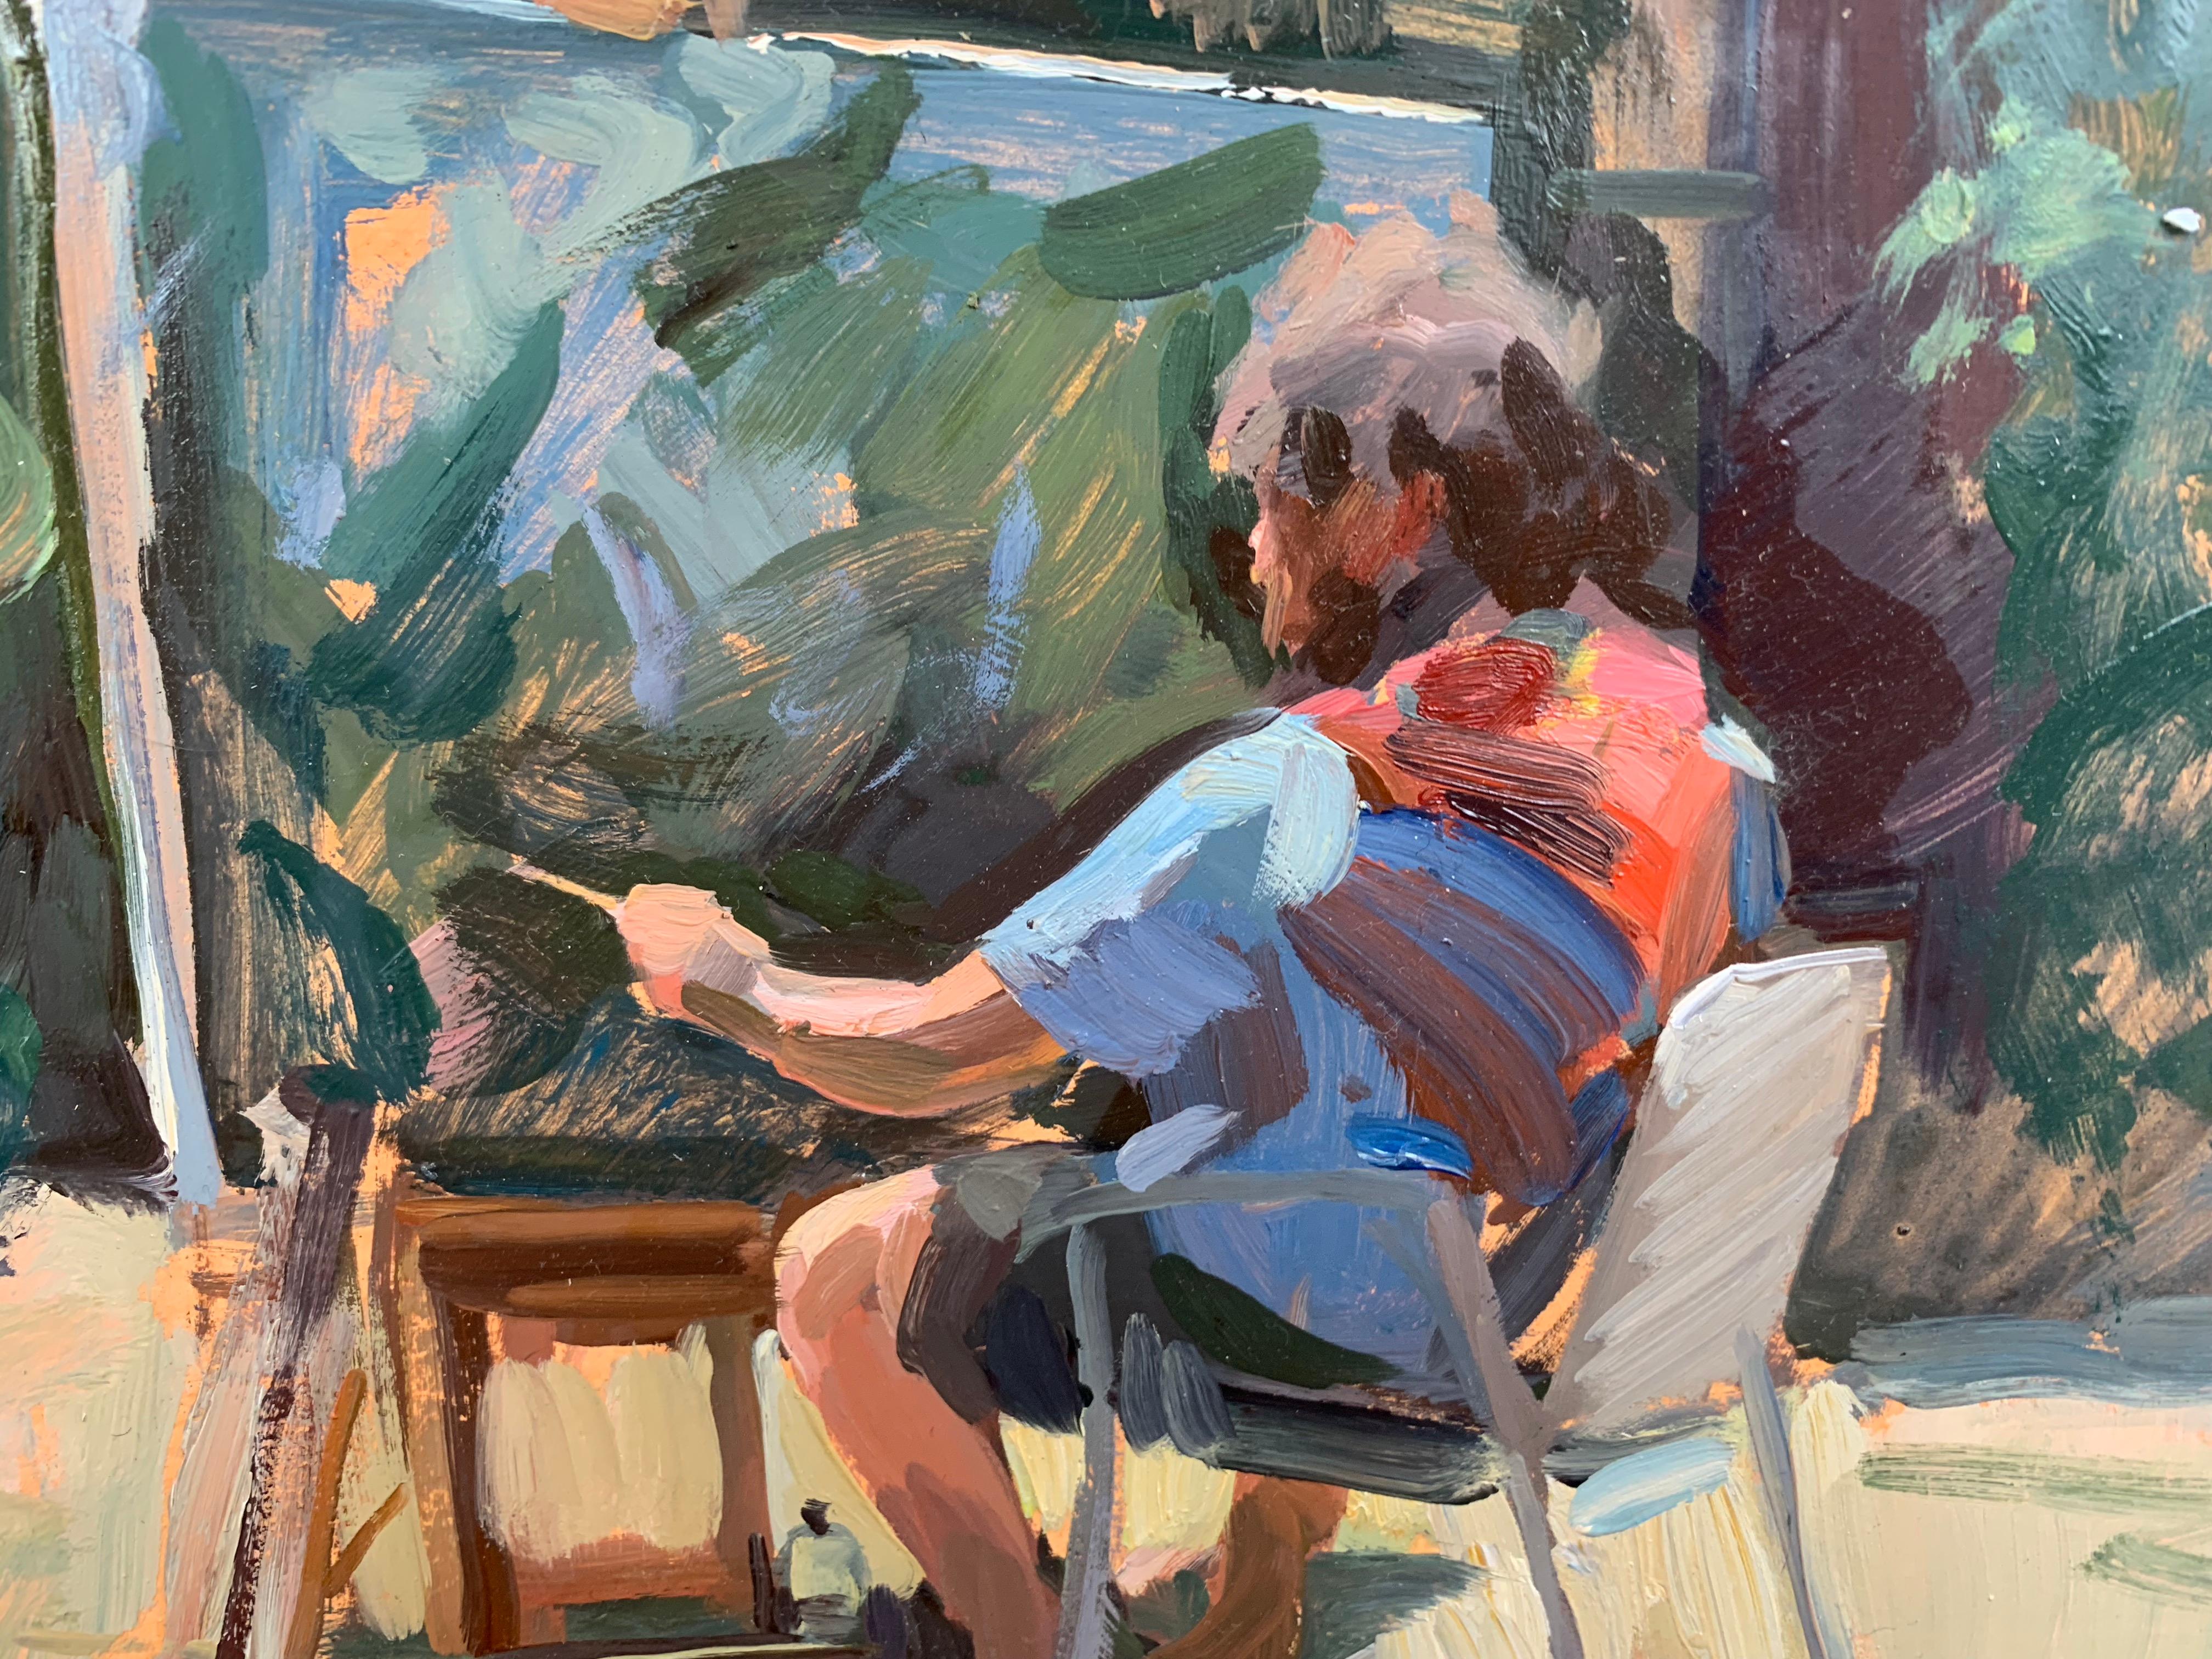 Ben Malerei (Impressionismus), Painting, von Marc Dalessio